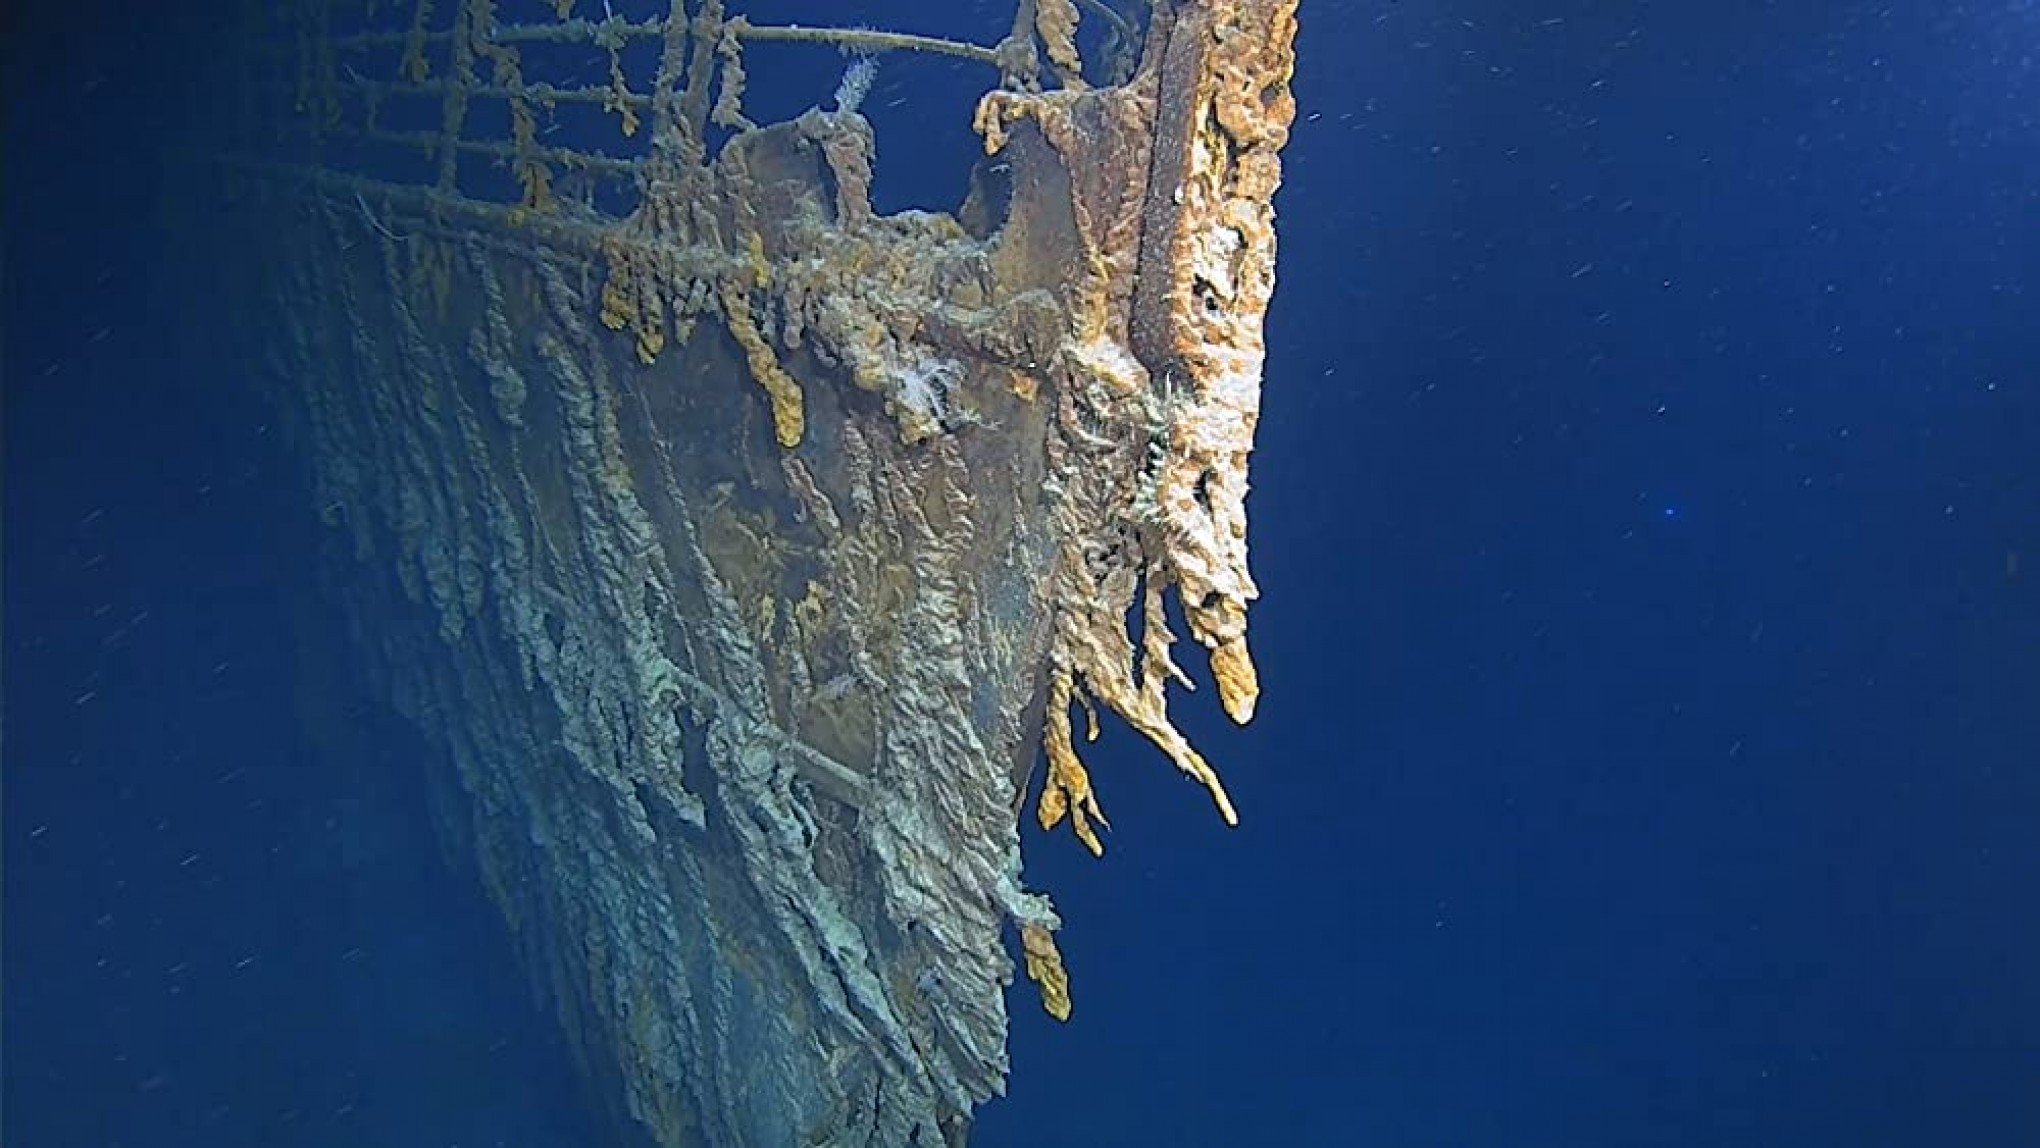 Submarino Usado Para Levar Turistas At Os Destro Os Do Titanic Desaparece No Oceano Atl Ntico